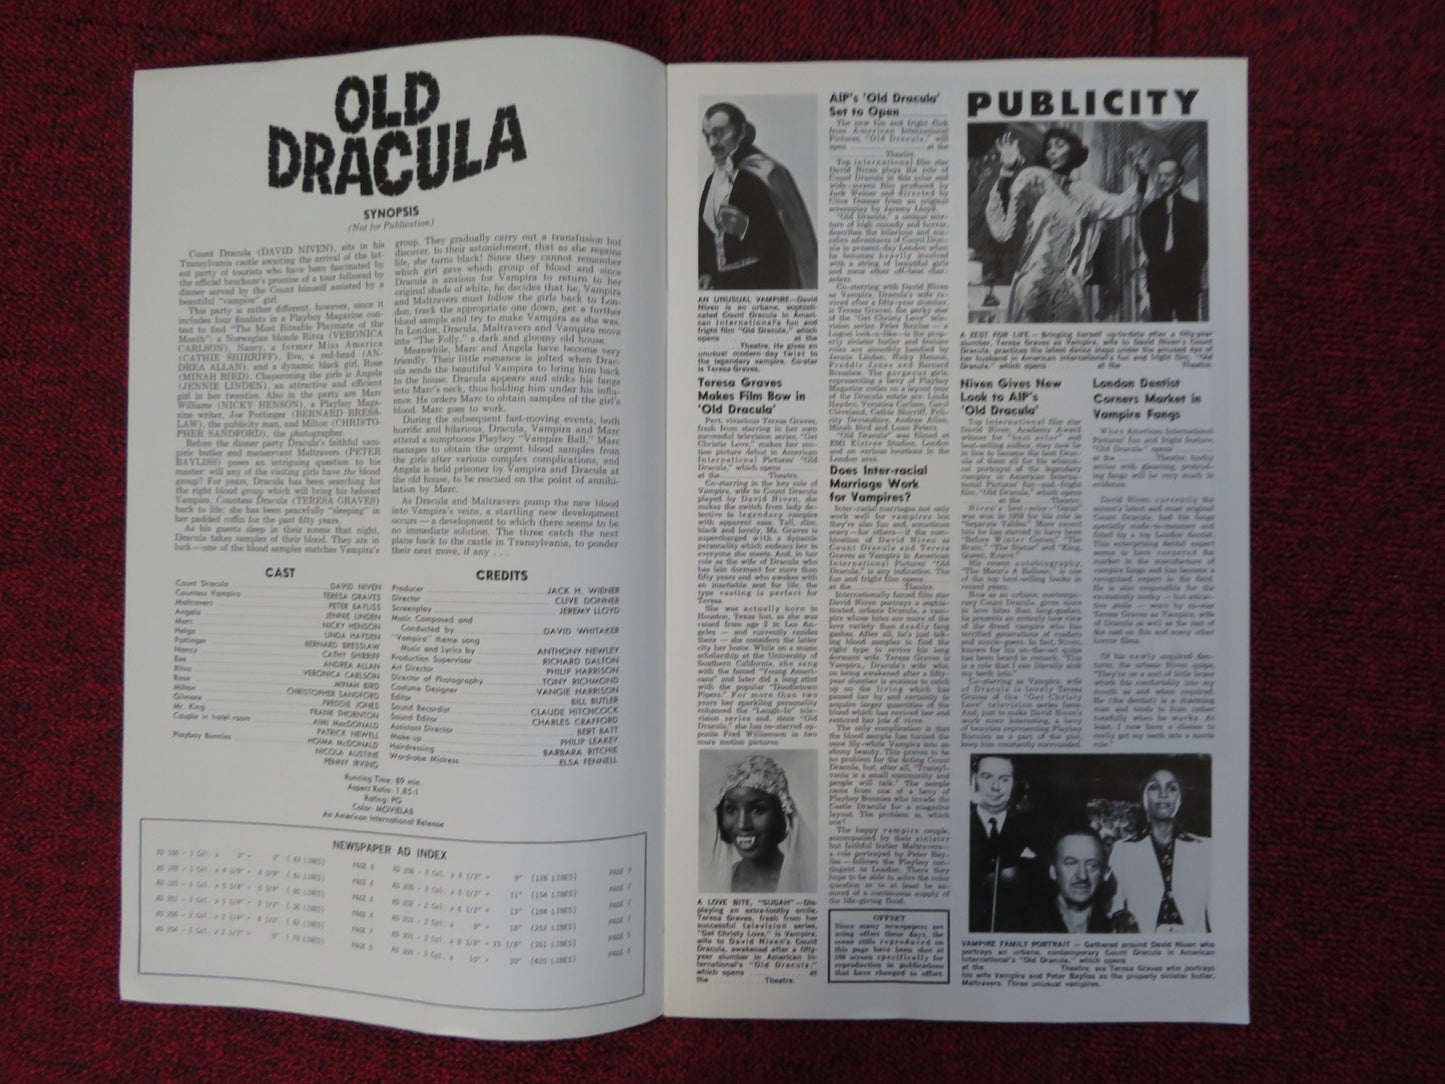 OLD DRACULA UNCUT AMERICAN INTERNATIONAL PRESS BOOK DAVID NIVEN GRAVES 1974